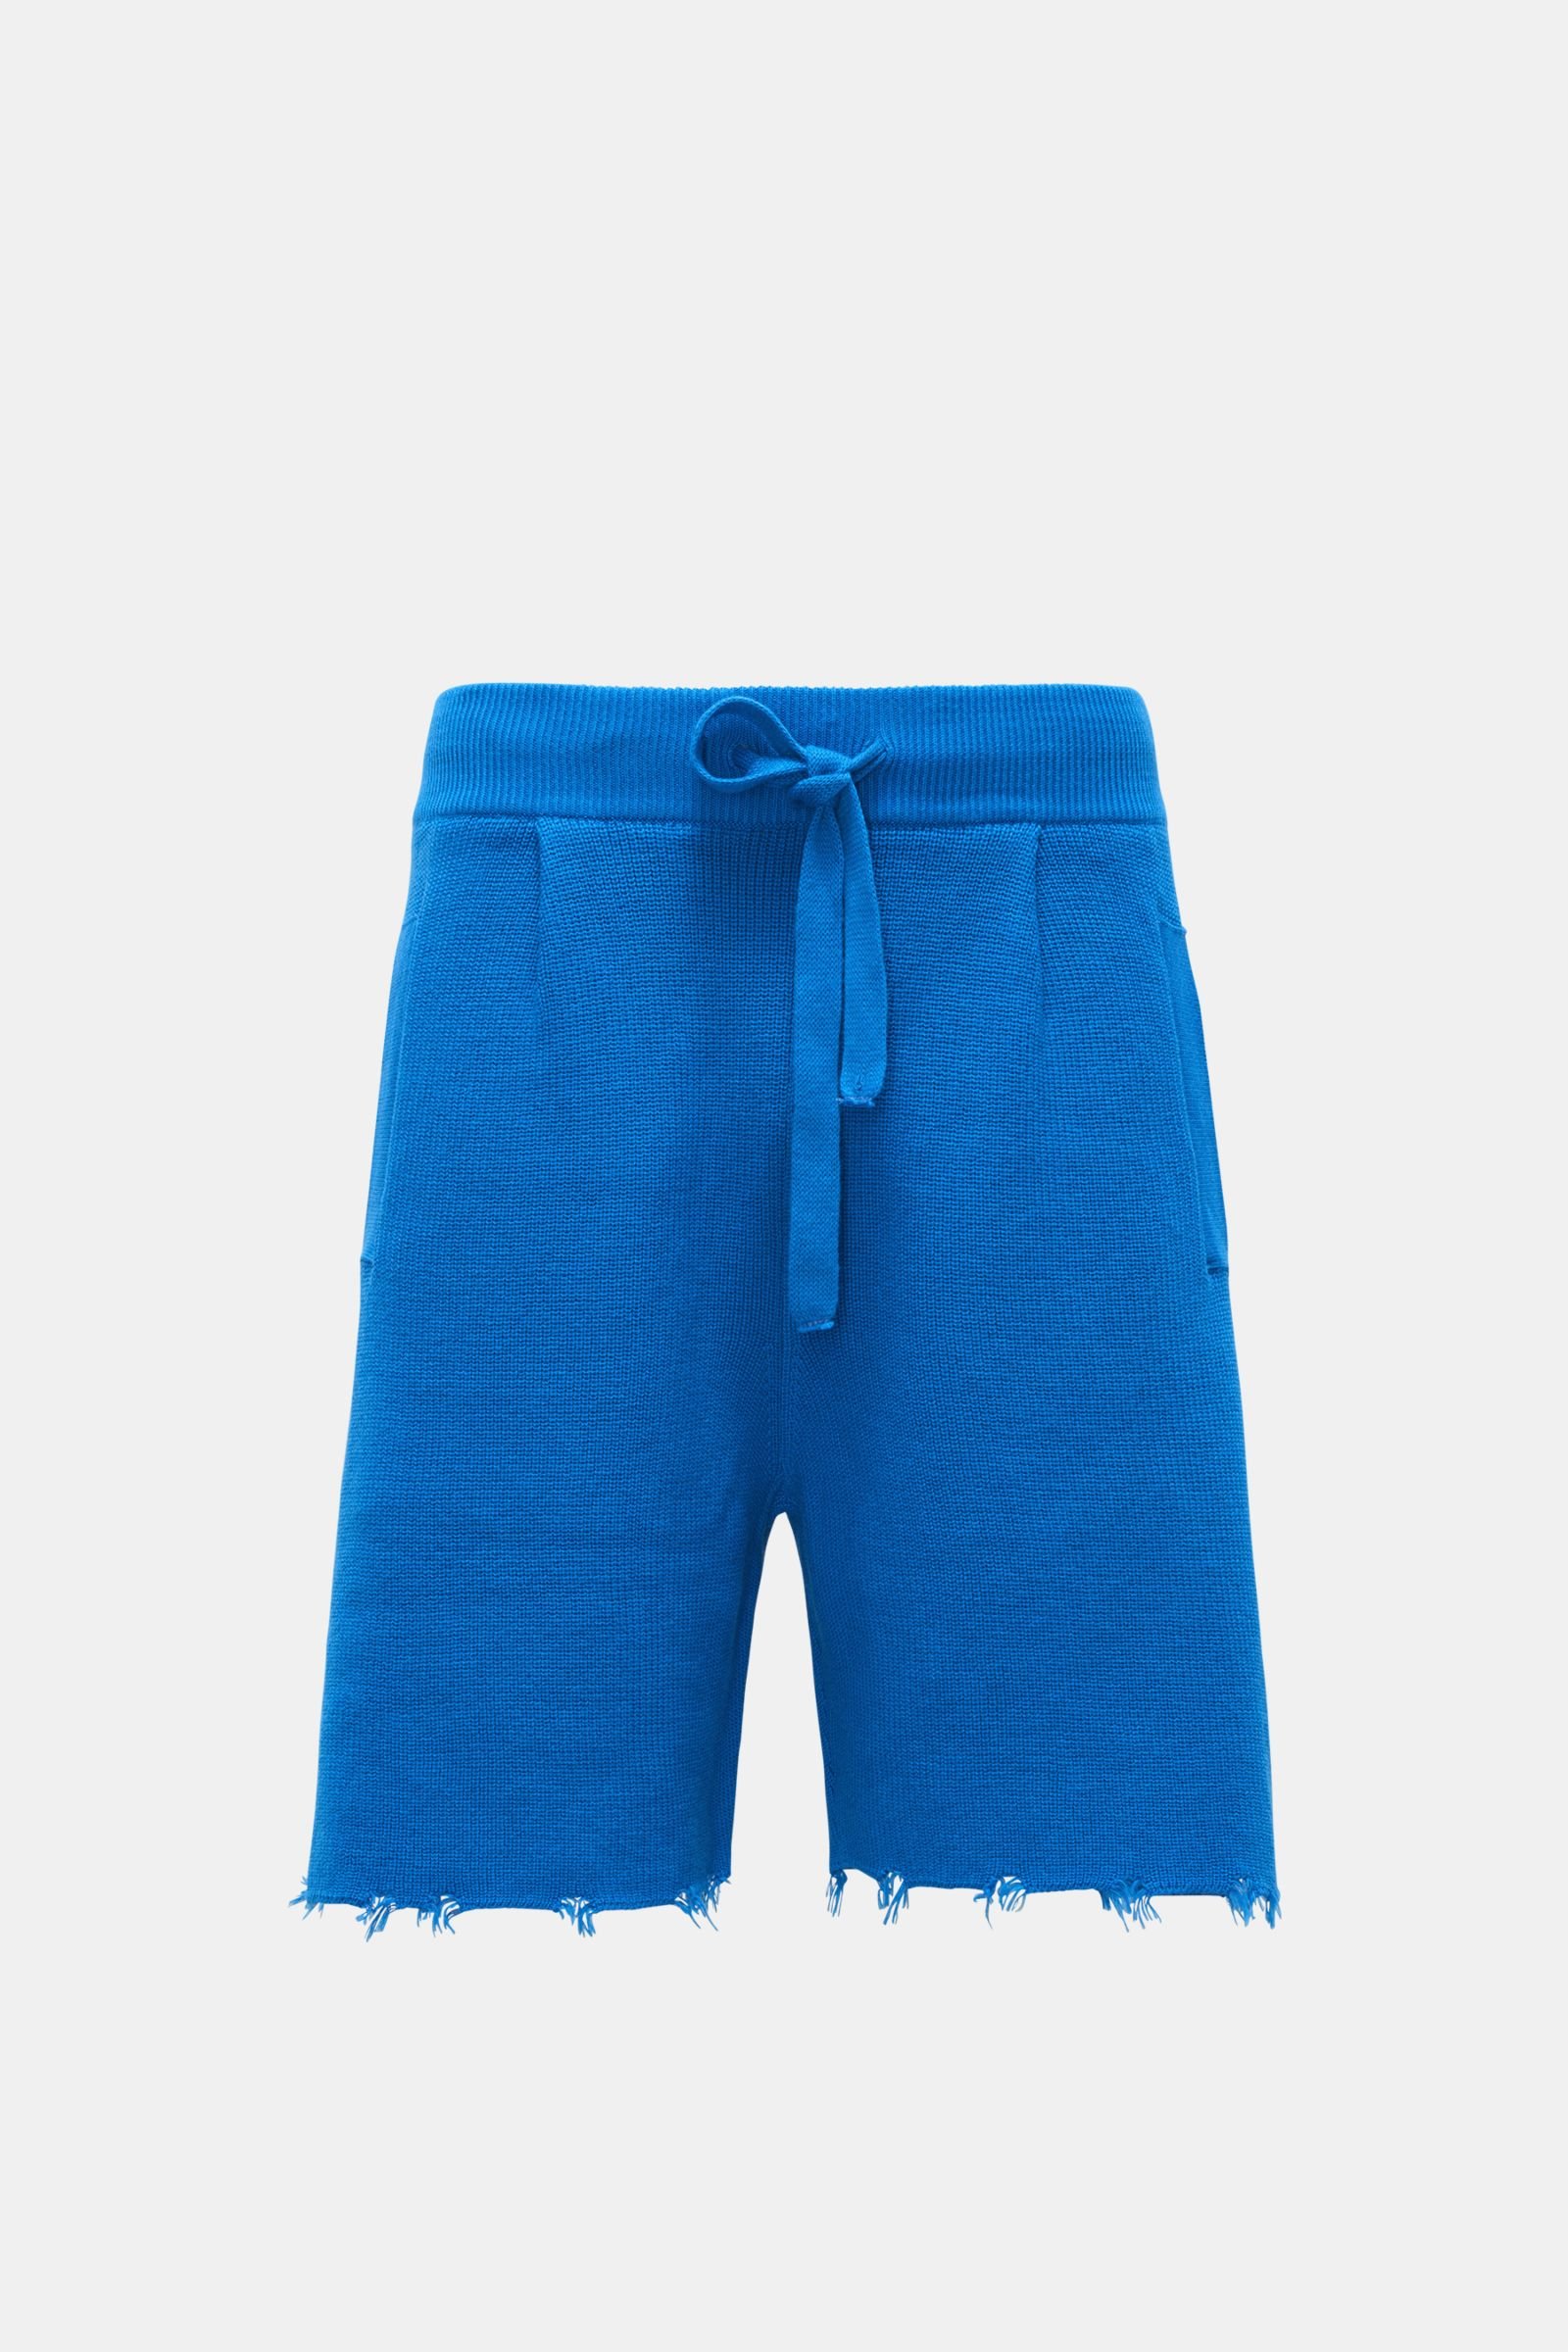 Sweat shorts blue